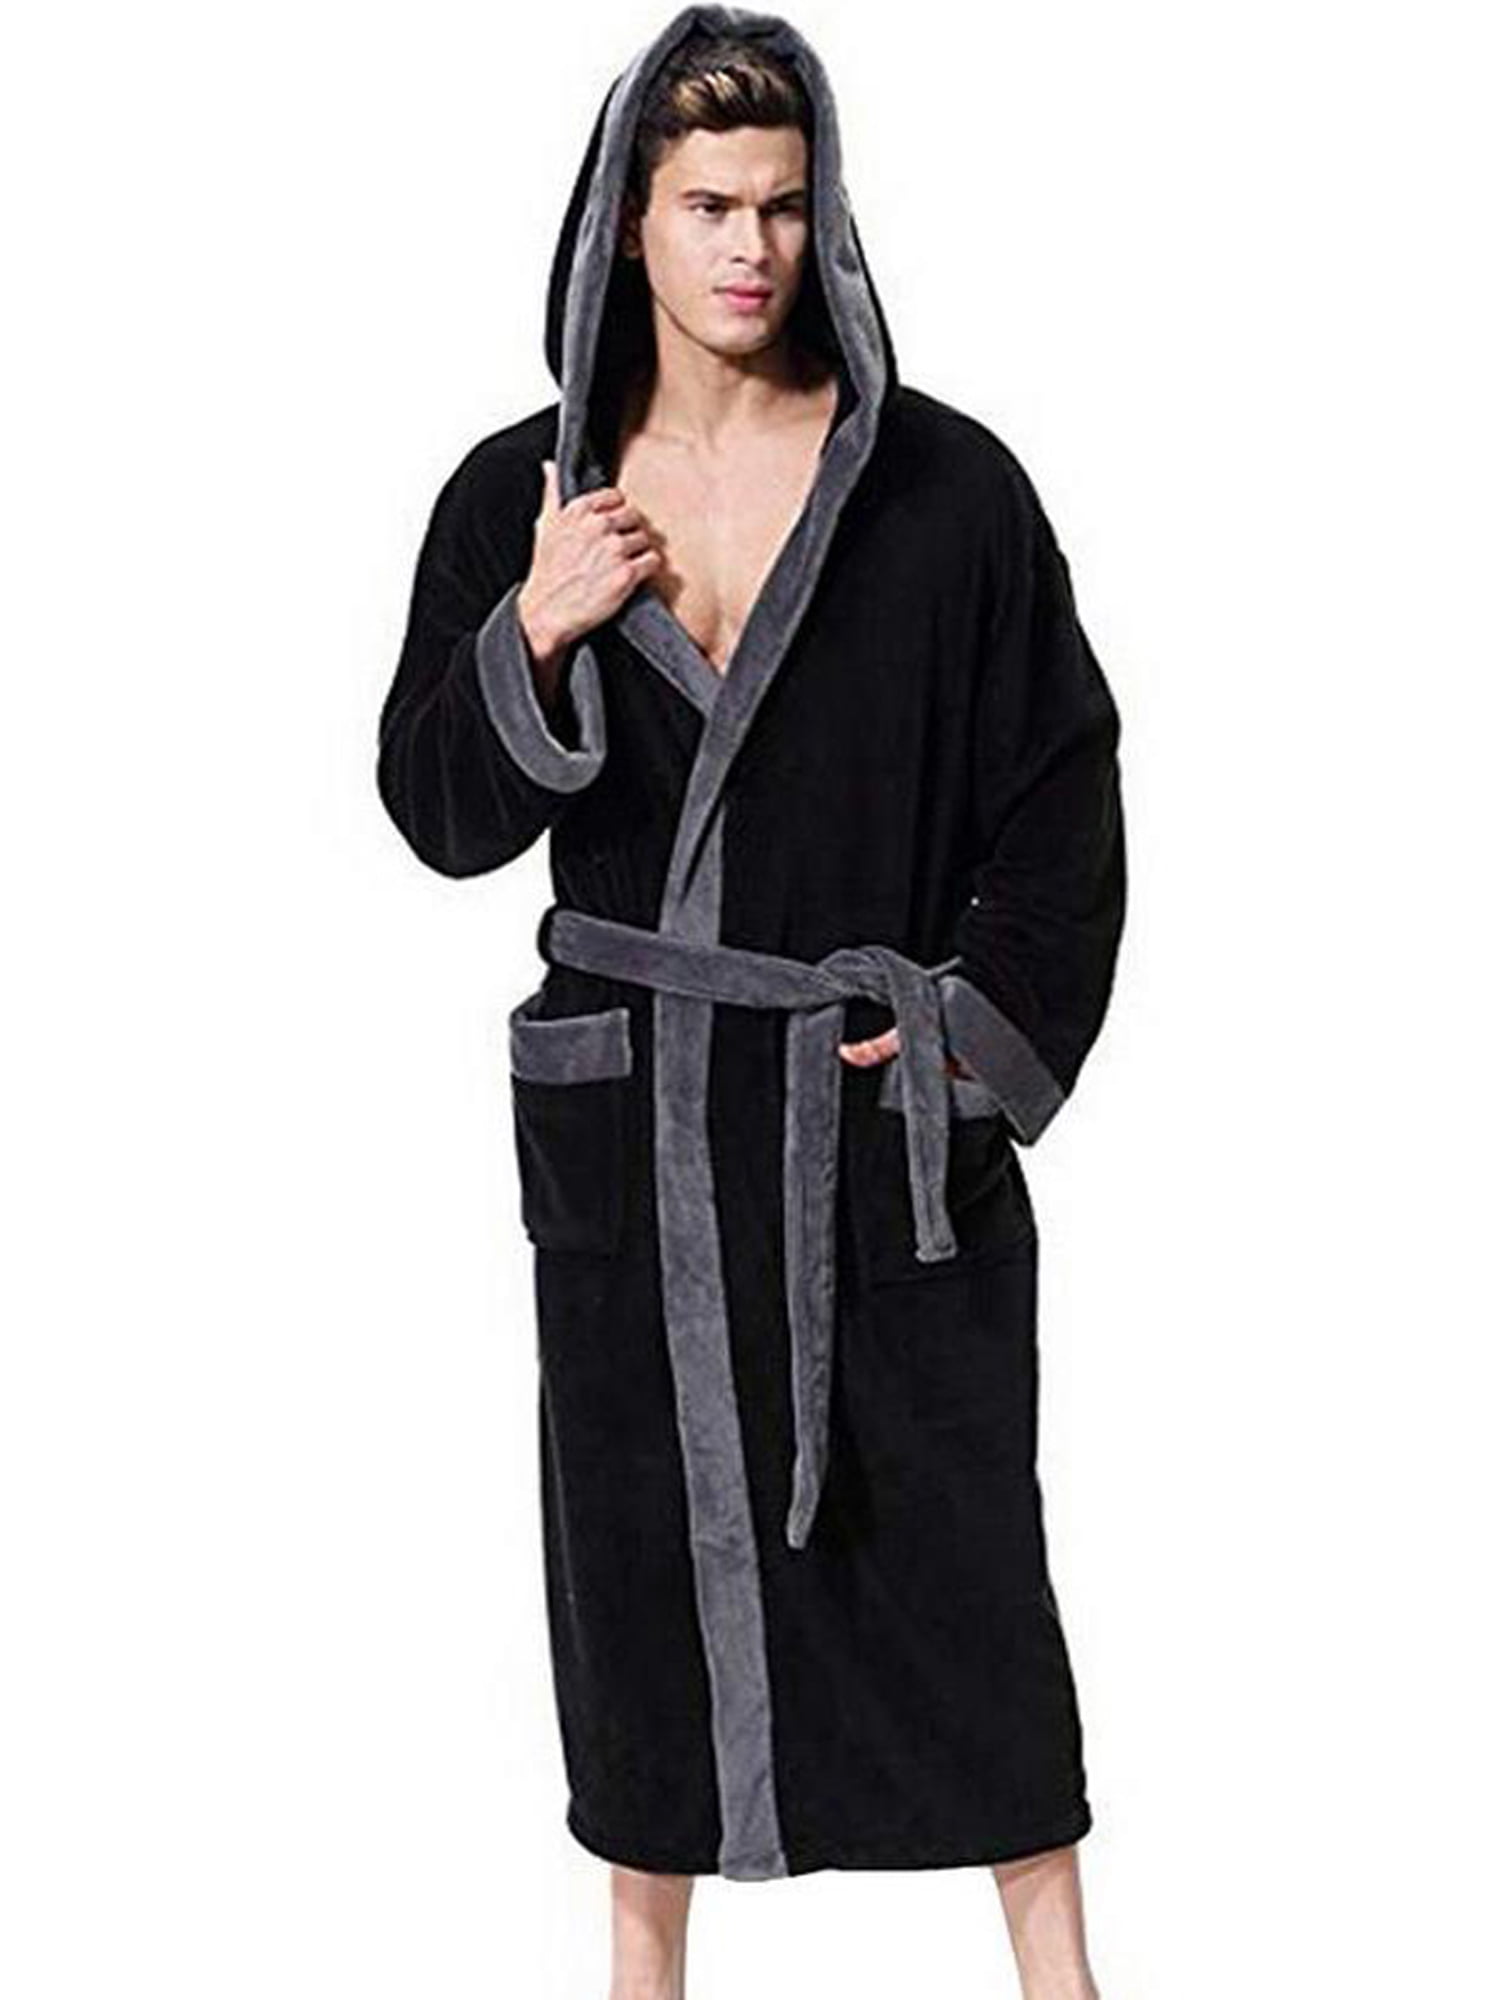 Men Winter Hooded Long Bathrobe Plus Size Sleepwear Mens Cozy Plush Bath Robe